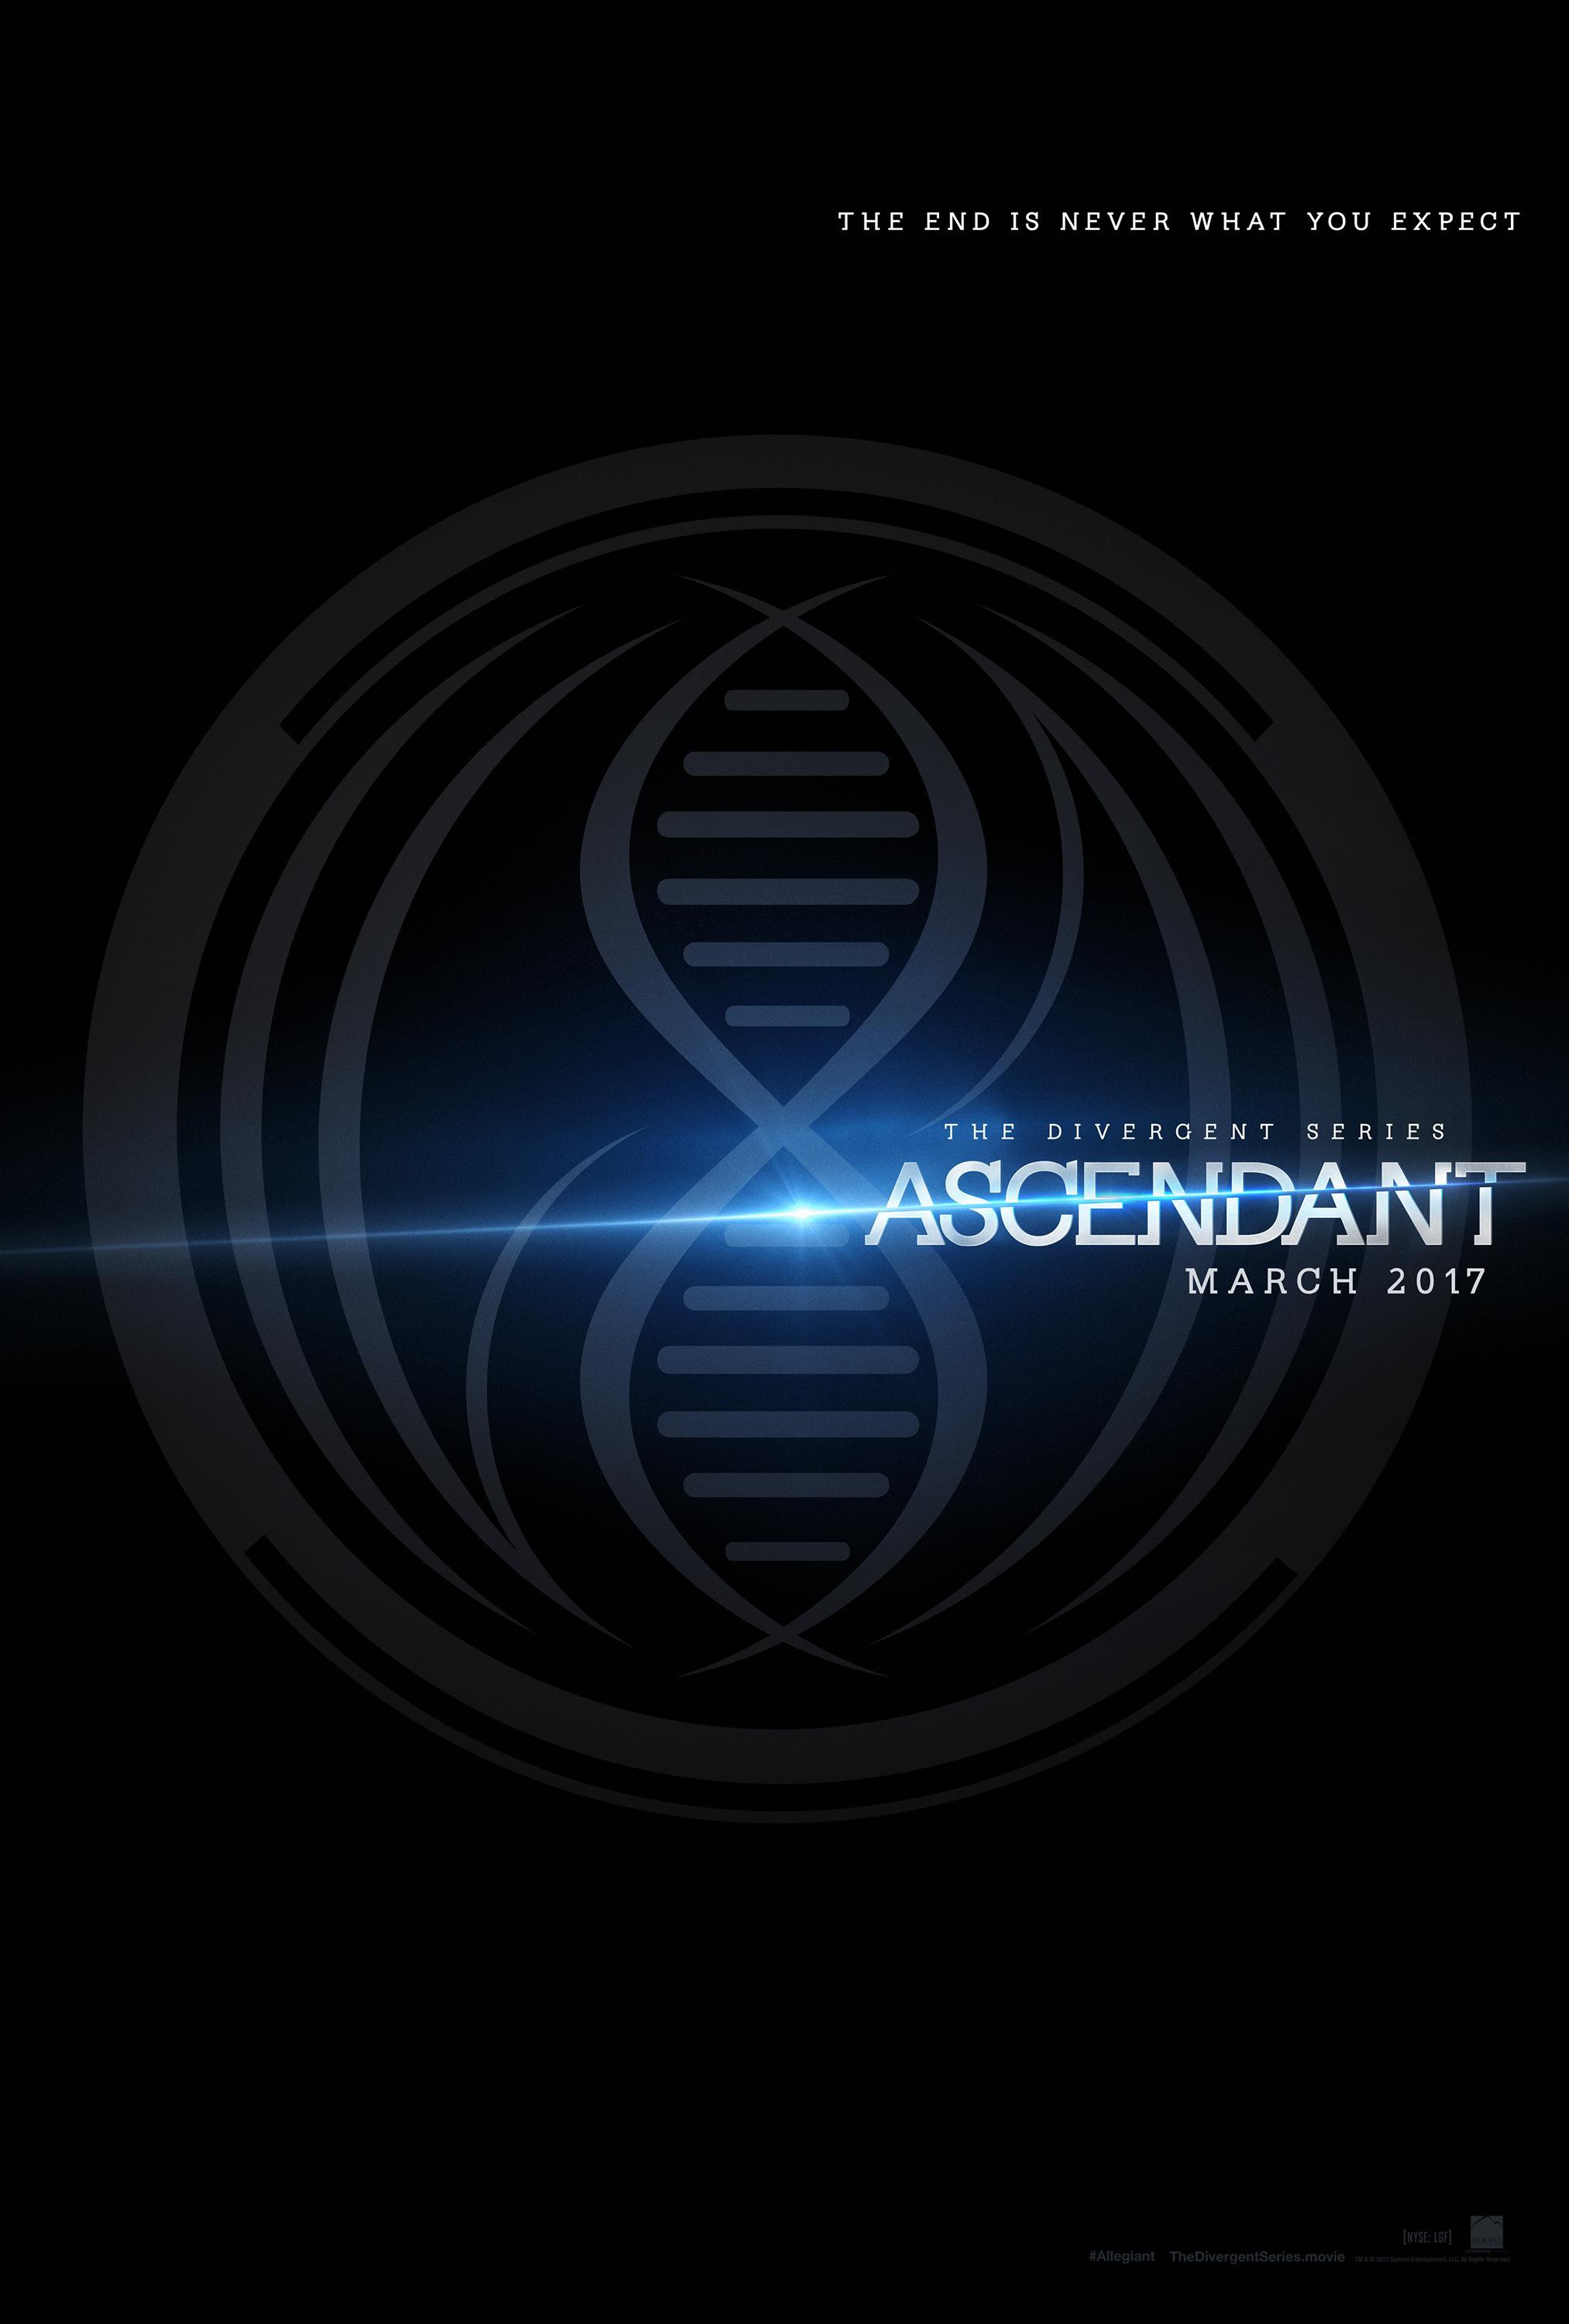 Mega Sized Movie Poster Image for The Divergent Series: Ascendant 